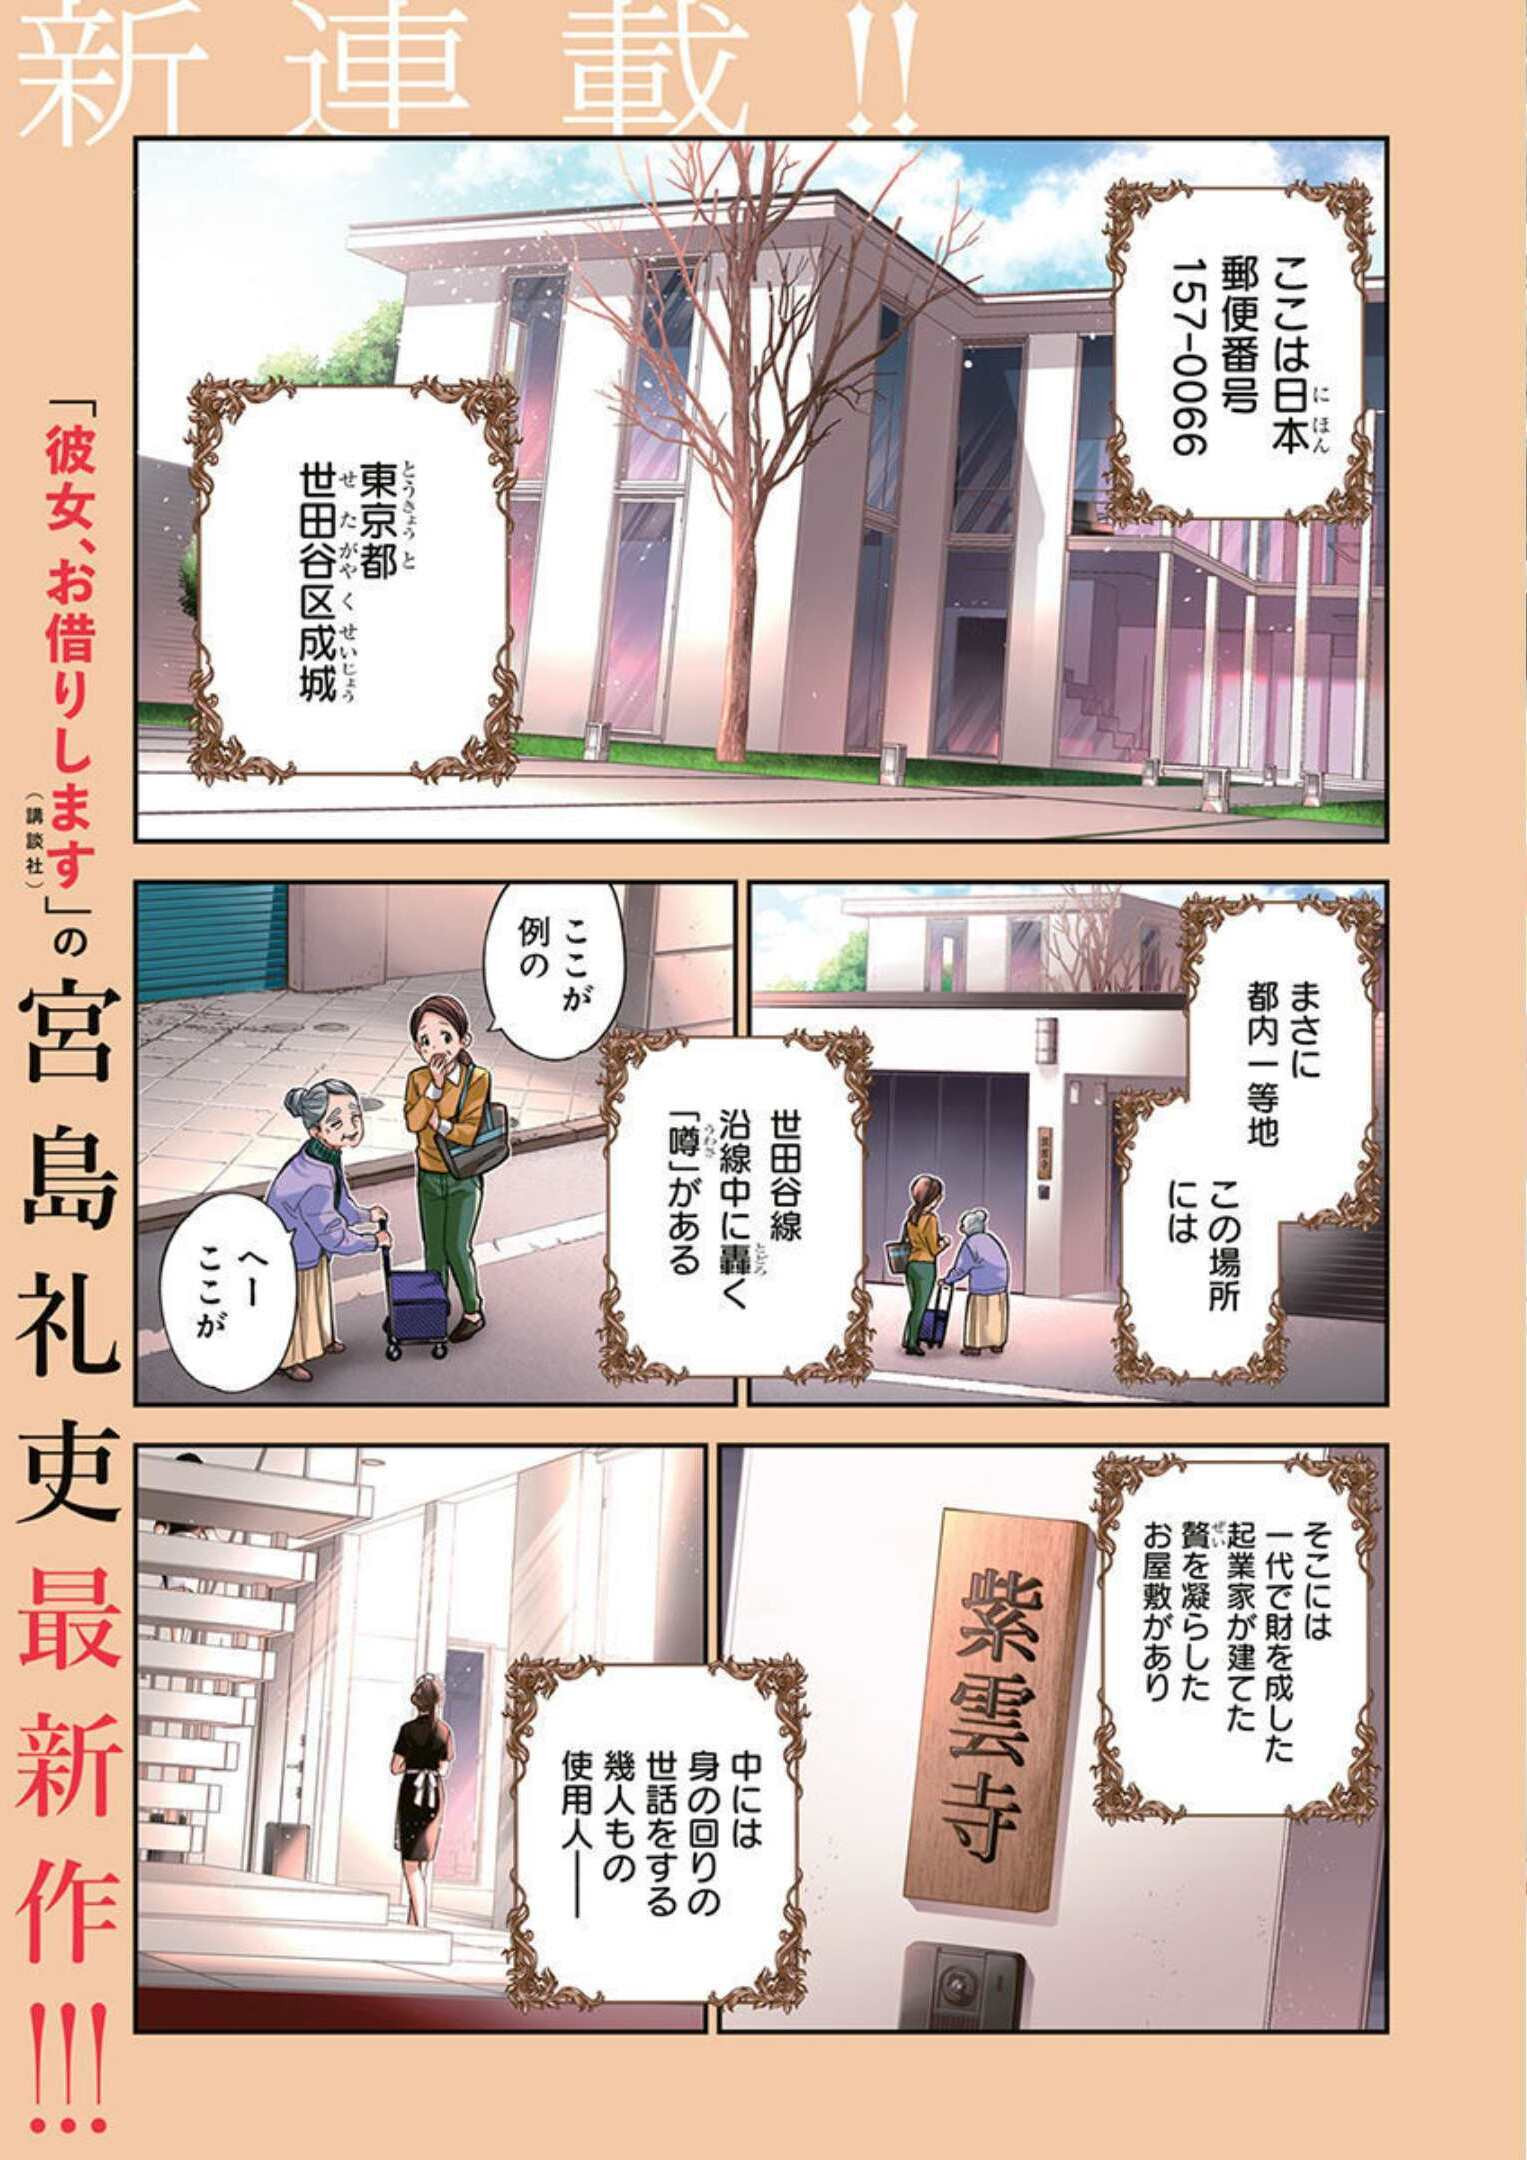 Shiunji-ke no Kodomotachi (Children of the Shiunji Family) - Chapter 01 - Page 1